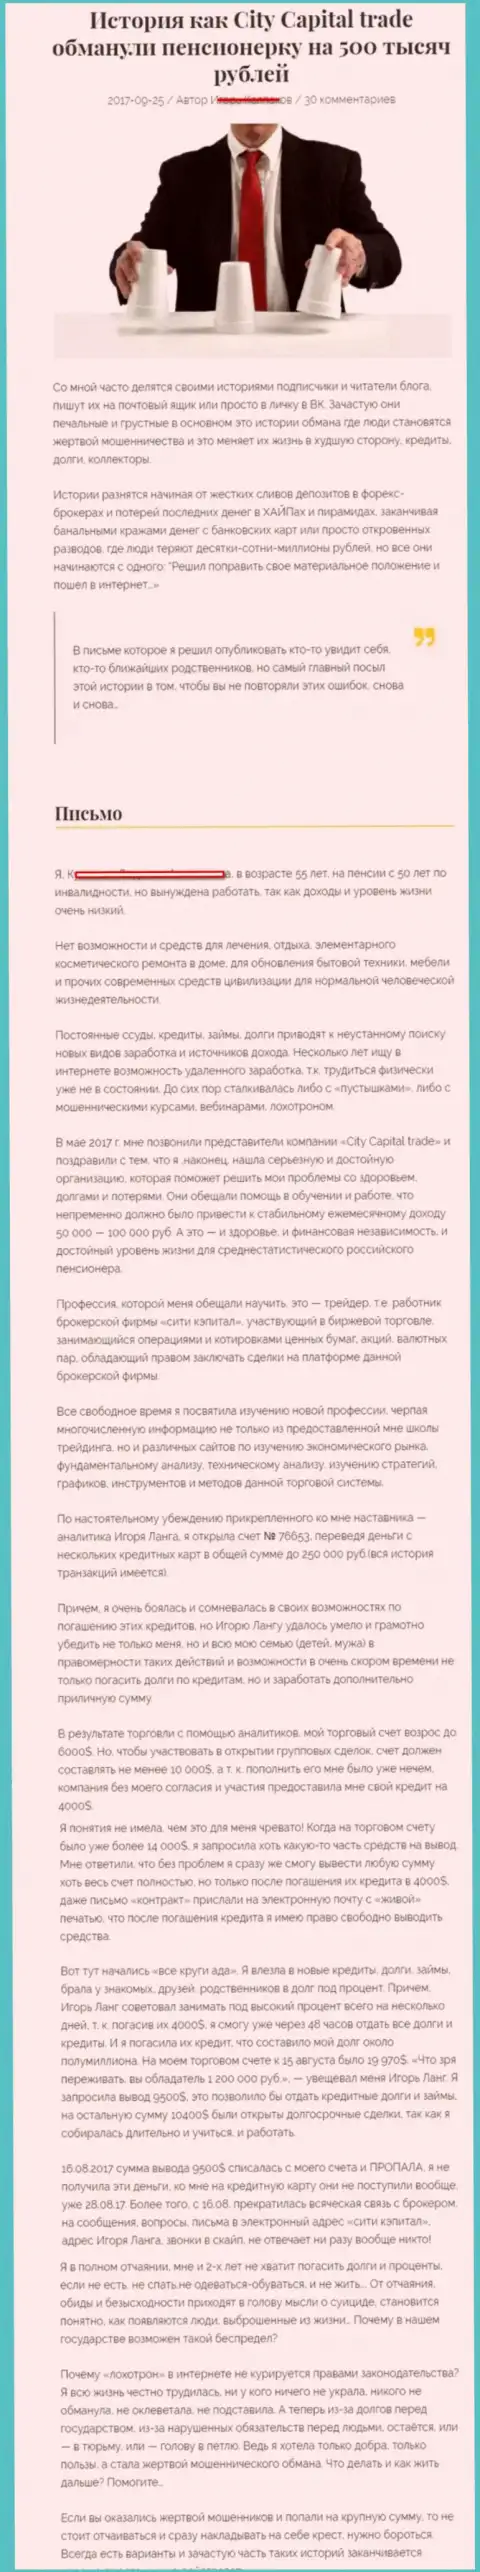 СитиКапитал развели клиентку на пенсии - инвалида на пятьсот тысяч российских рублей - МОШЕННИКИ !!!